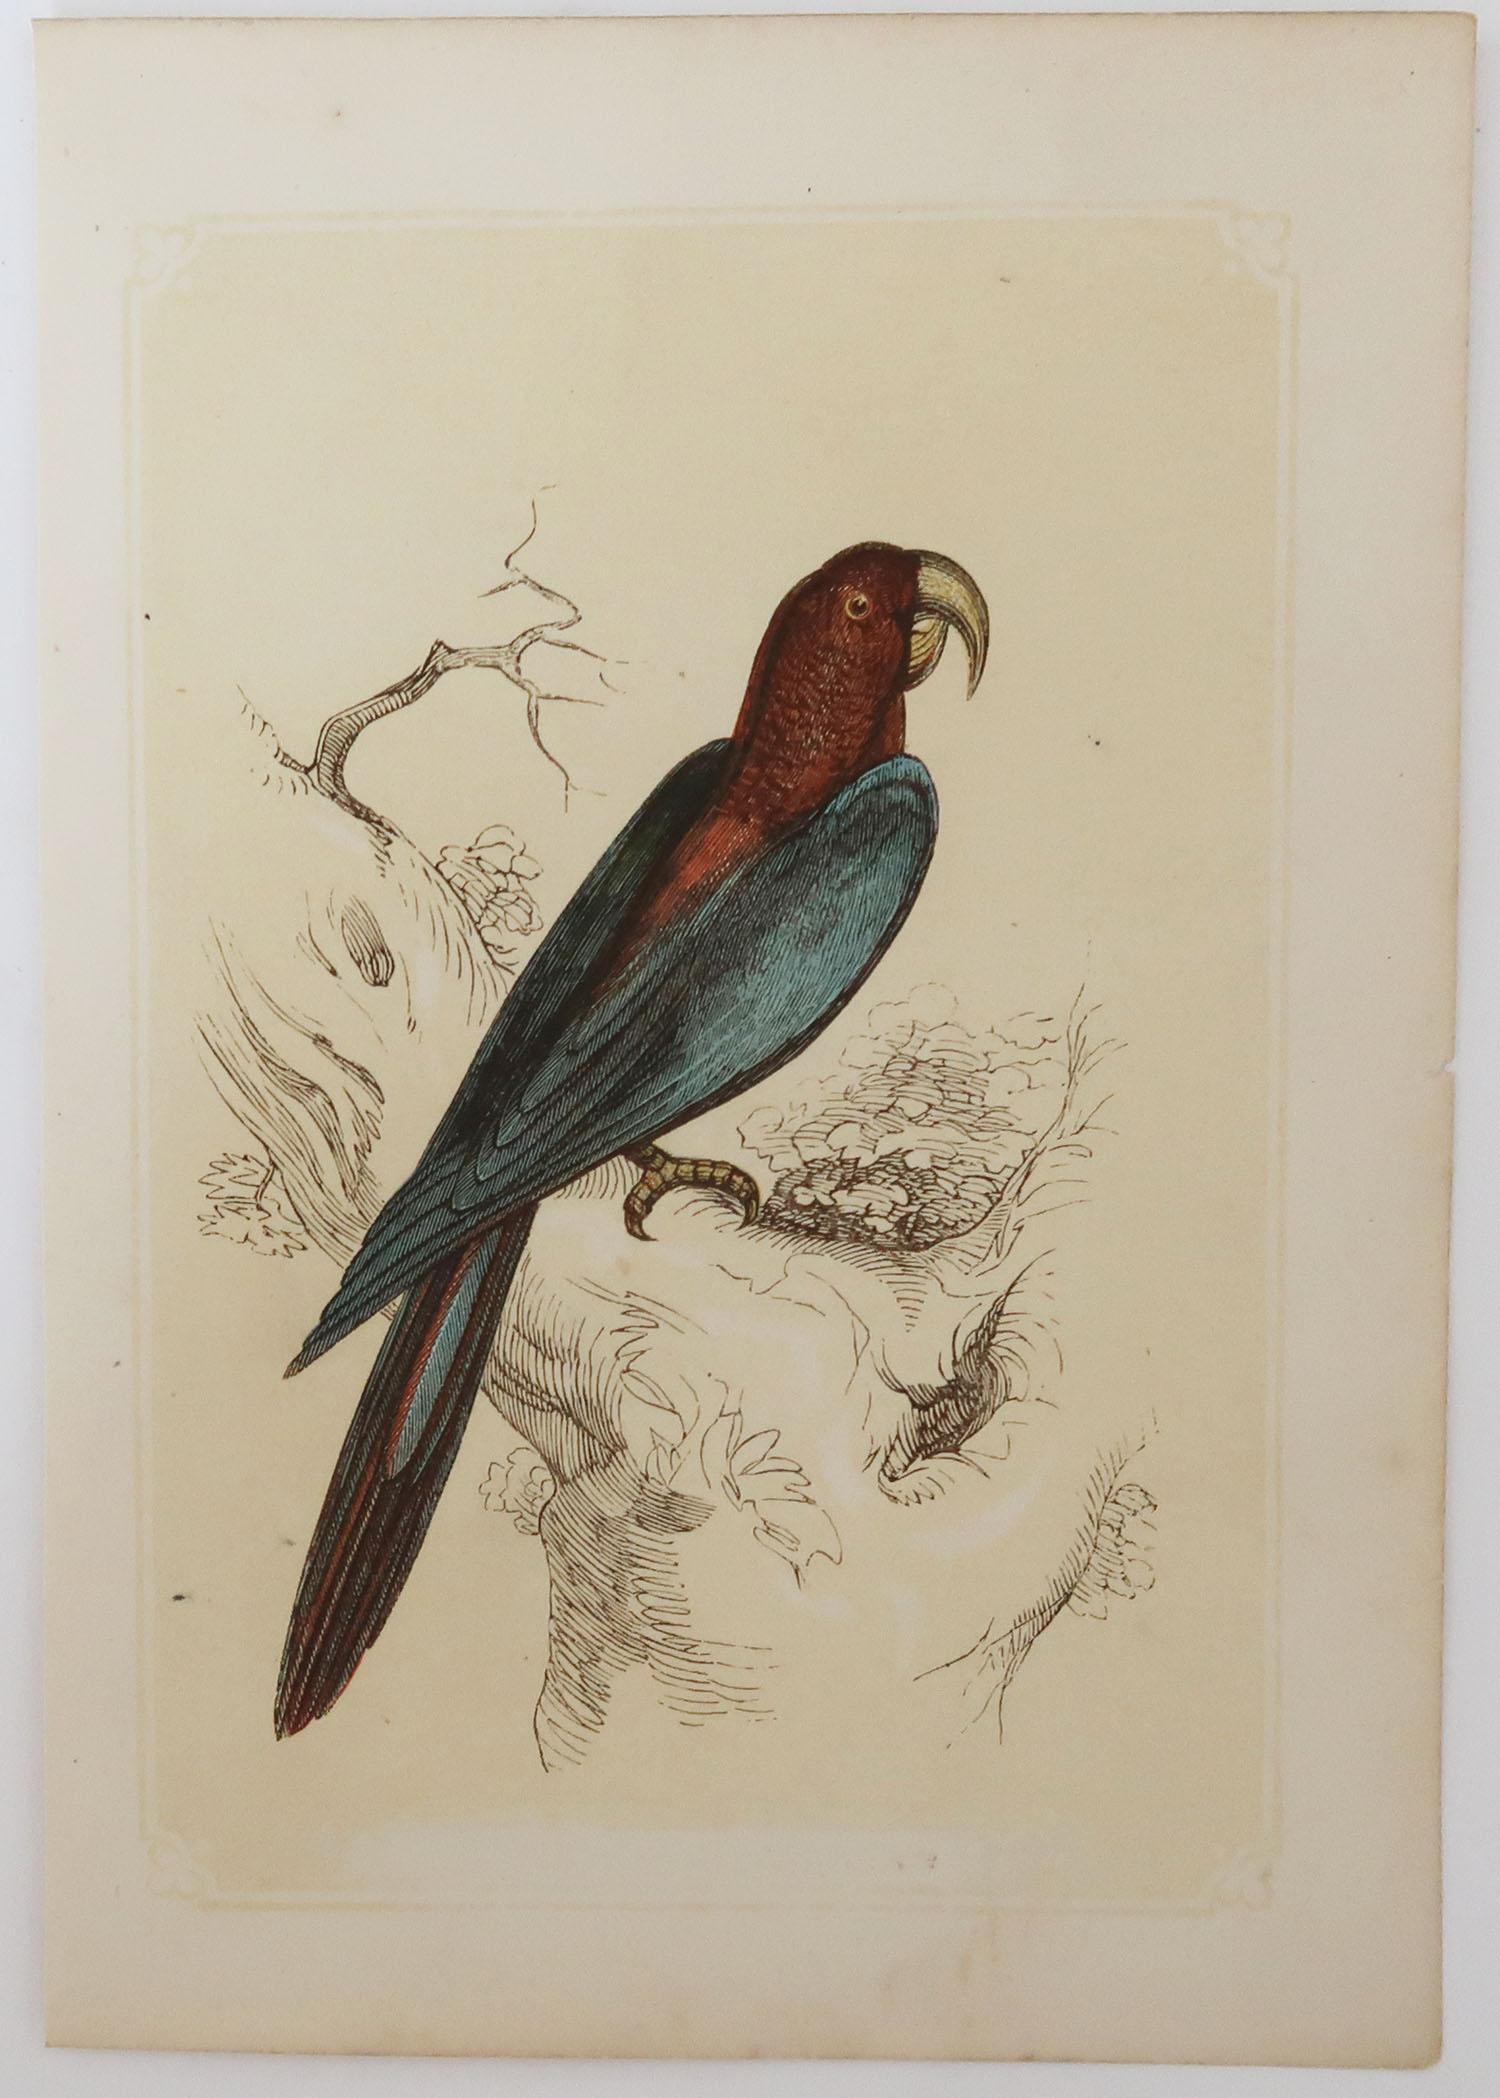 Folk Art Original Antique Bird Print, the Red and Blue Macaw, Tallis circa 1850